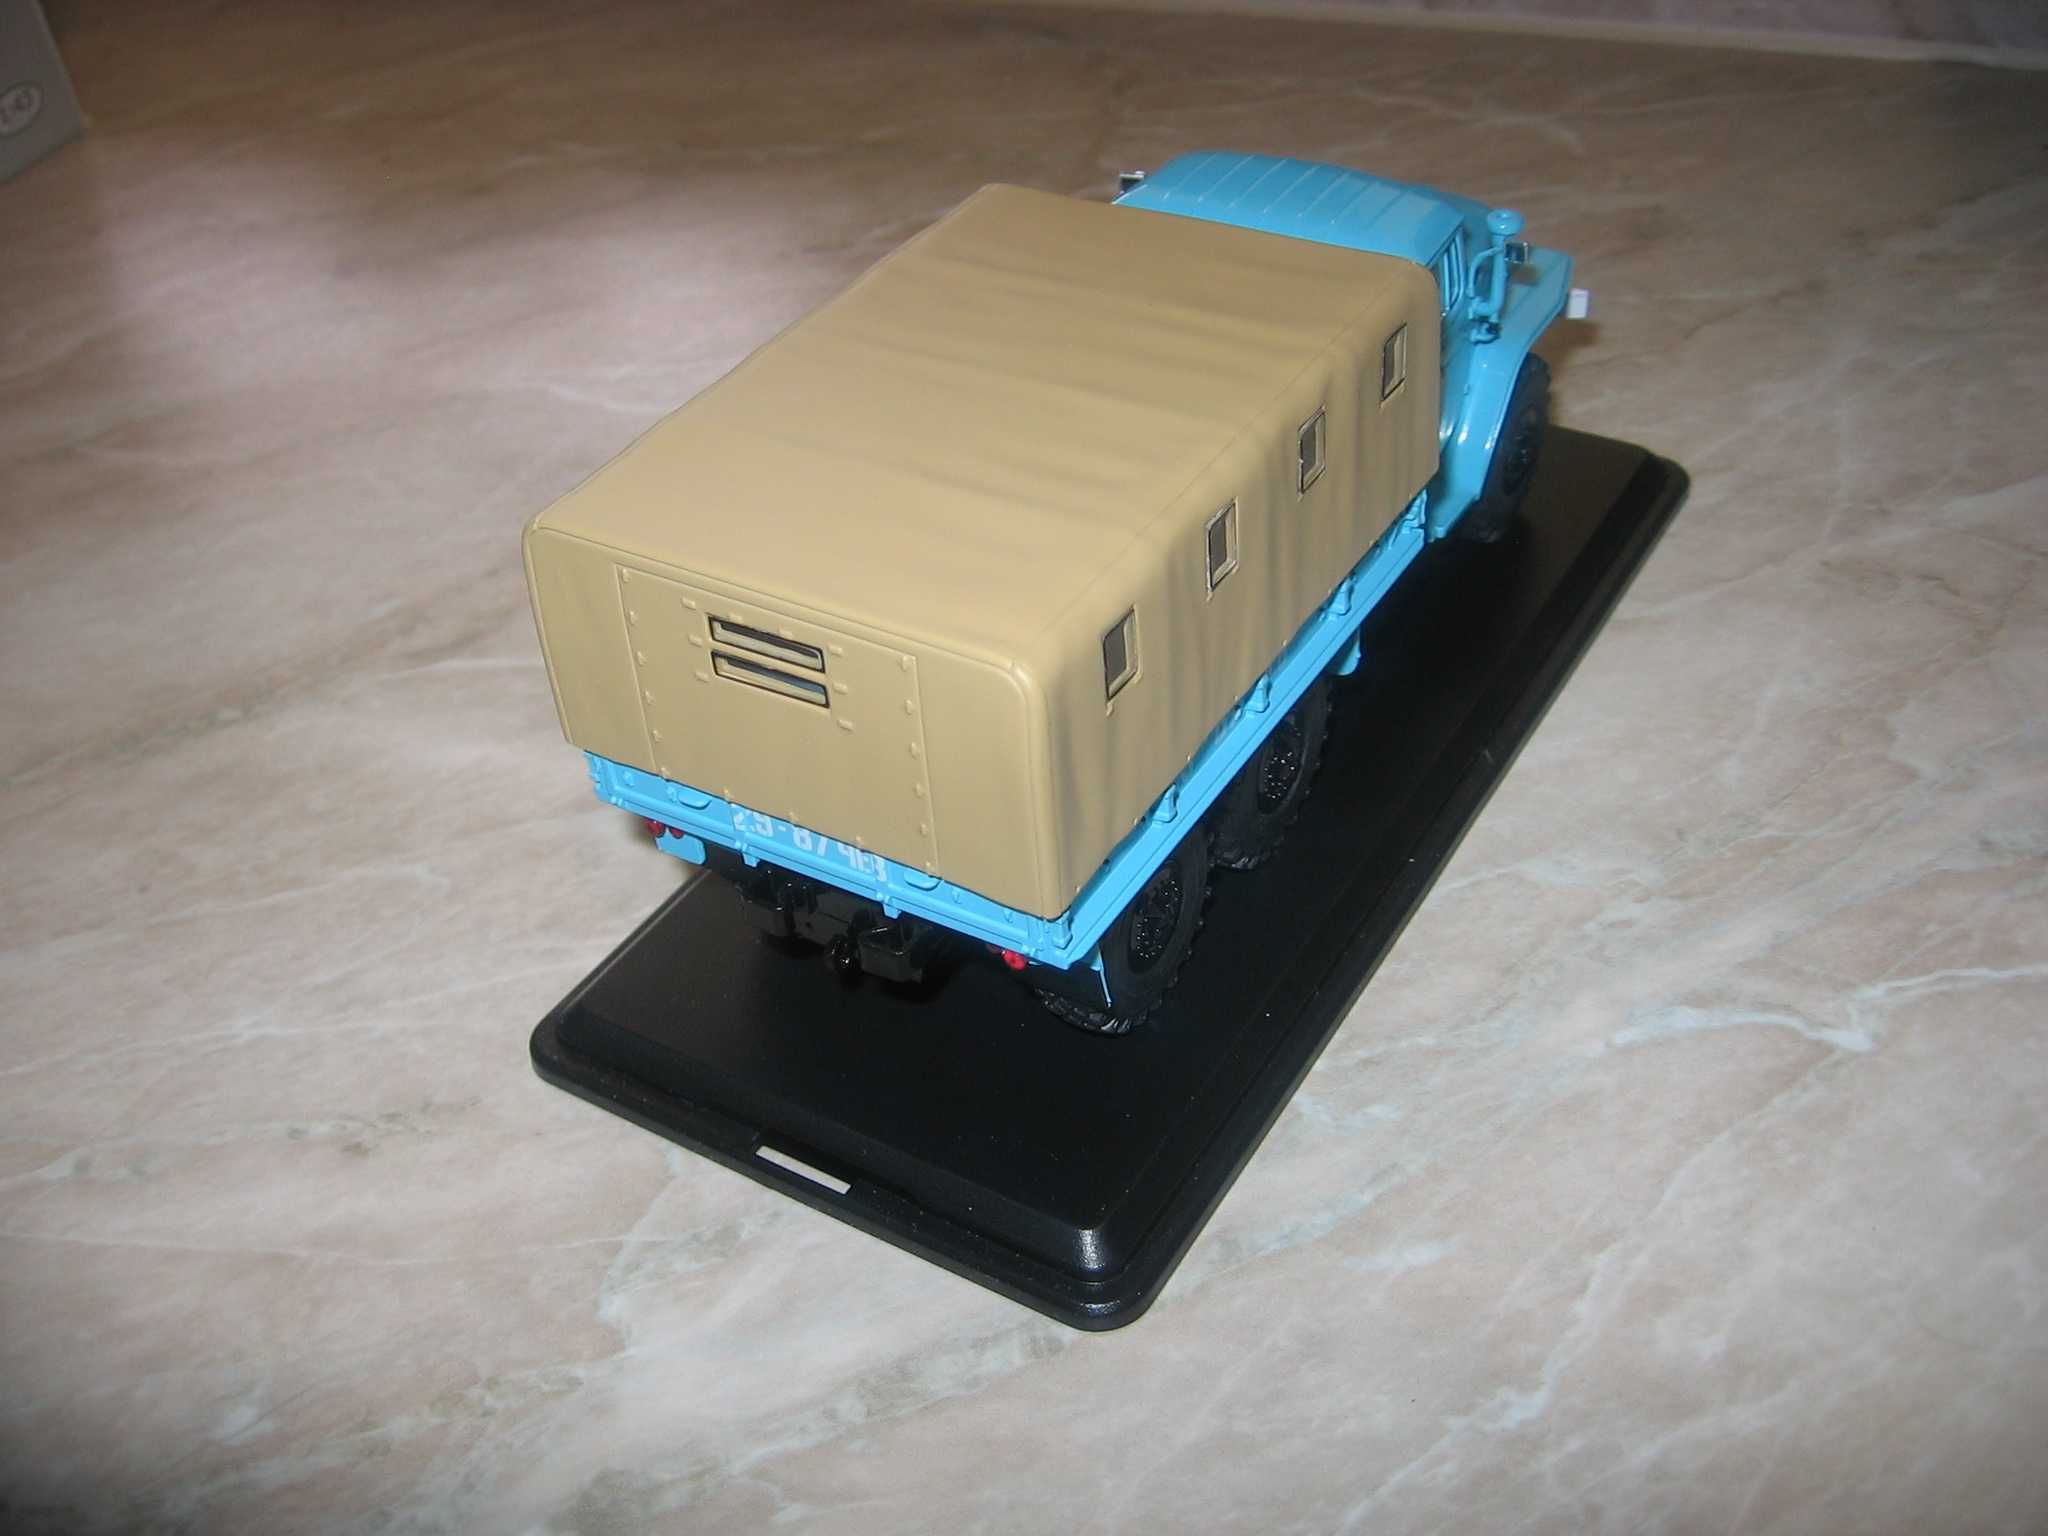 URAL 375D - SSM - skala 1:43 - Kultowe ciężarówki auta PRL